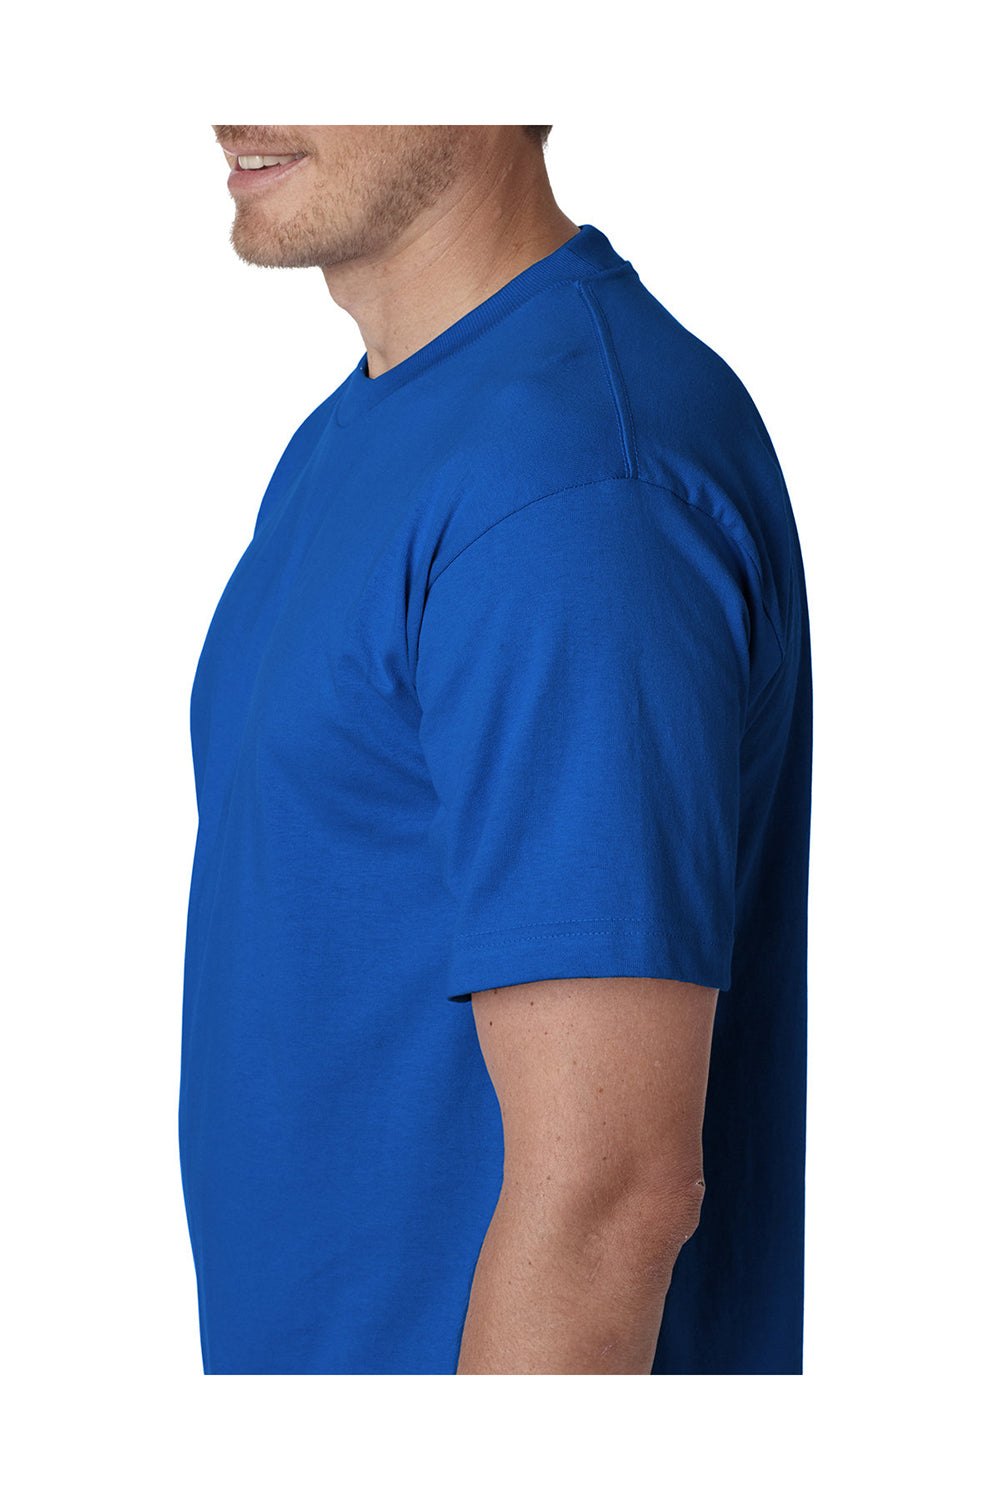 Bayside BA5100 Mens USA Made Short Sleeve Crewneck T-Shirt Royal Blue Model Side